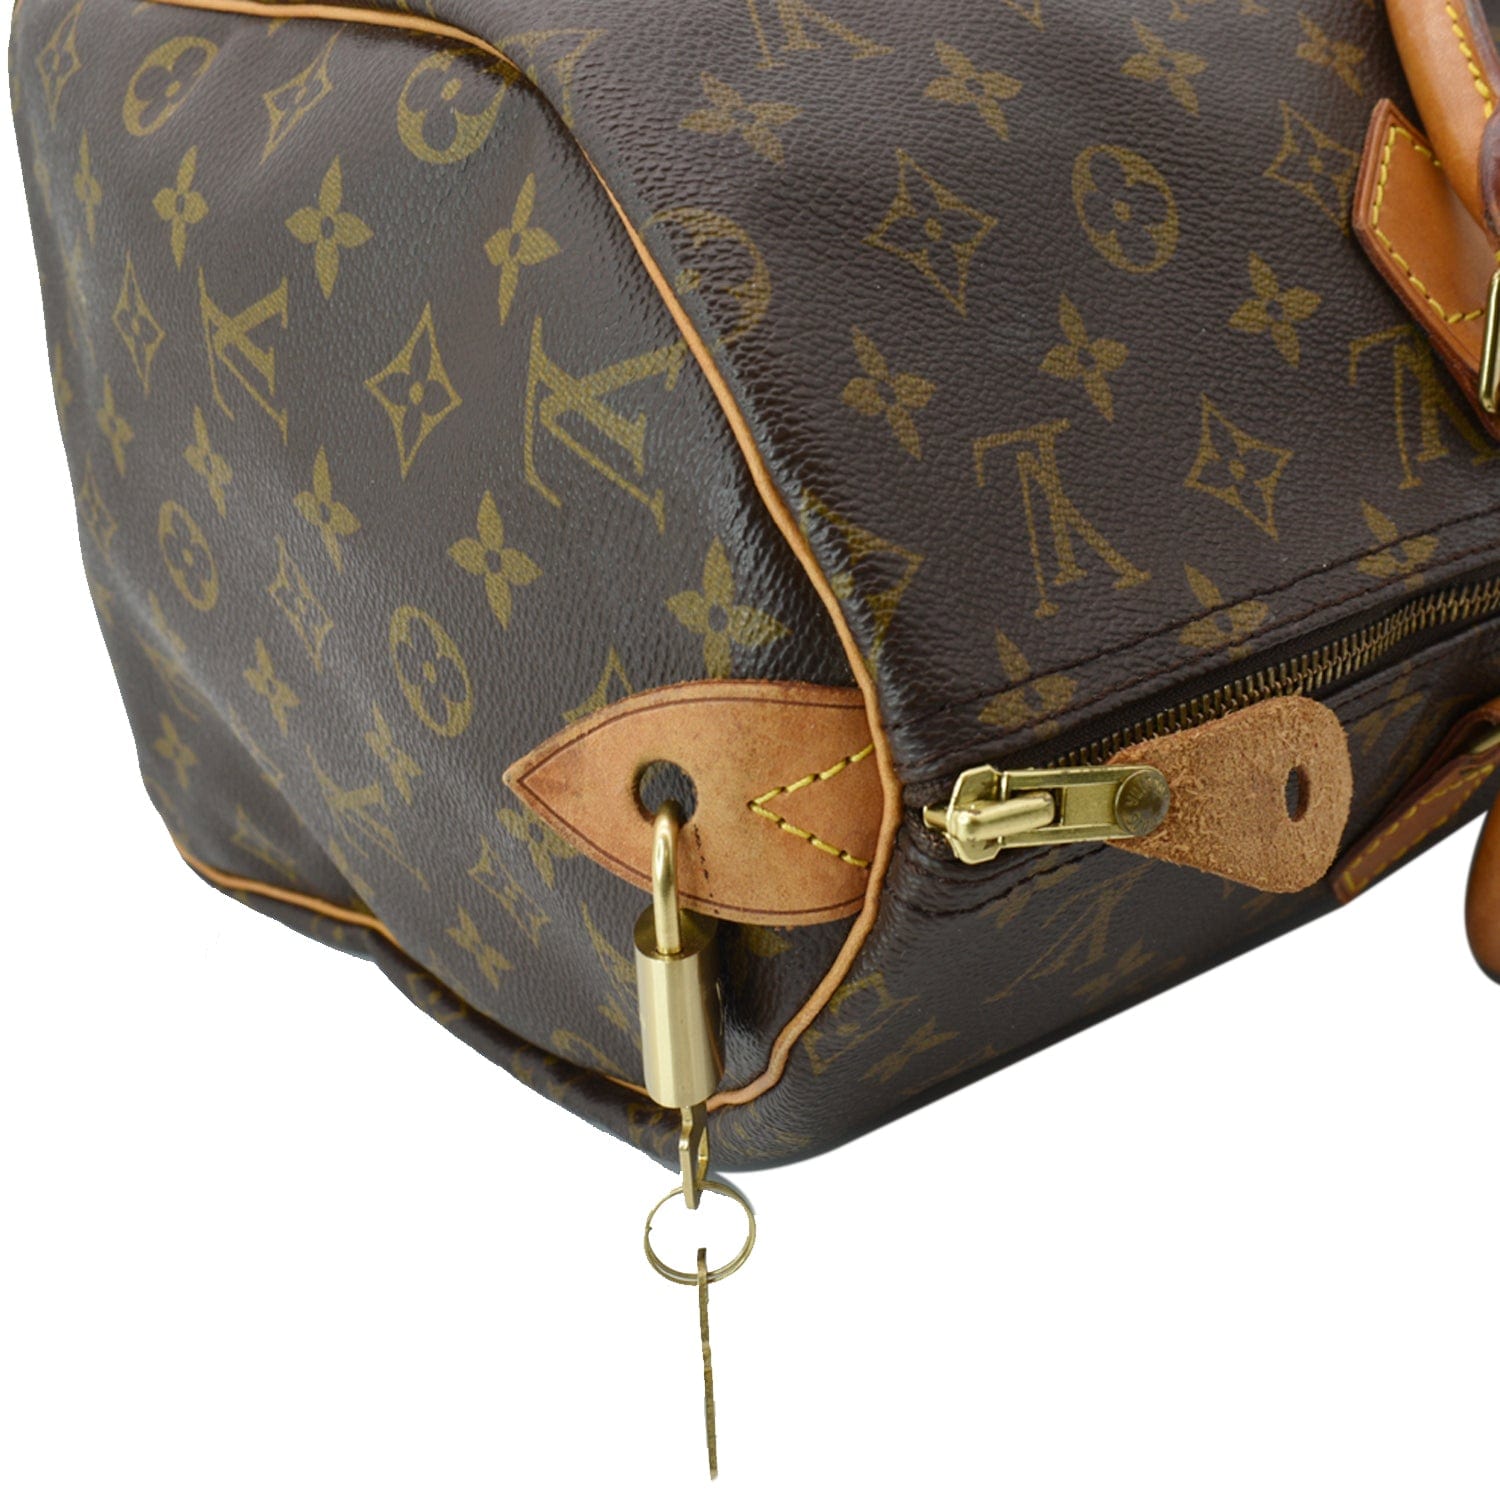 Louis Vuitton Speedy Large Monogram 40 Gm 871944 Brown Coated Canvas  Weekend/Travel Bag, Louis Vuitton